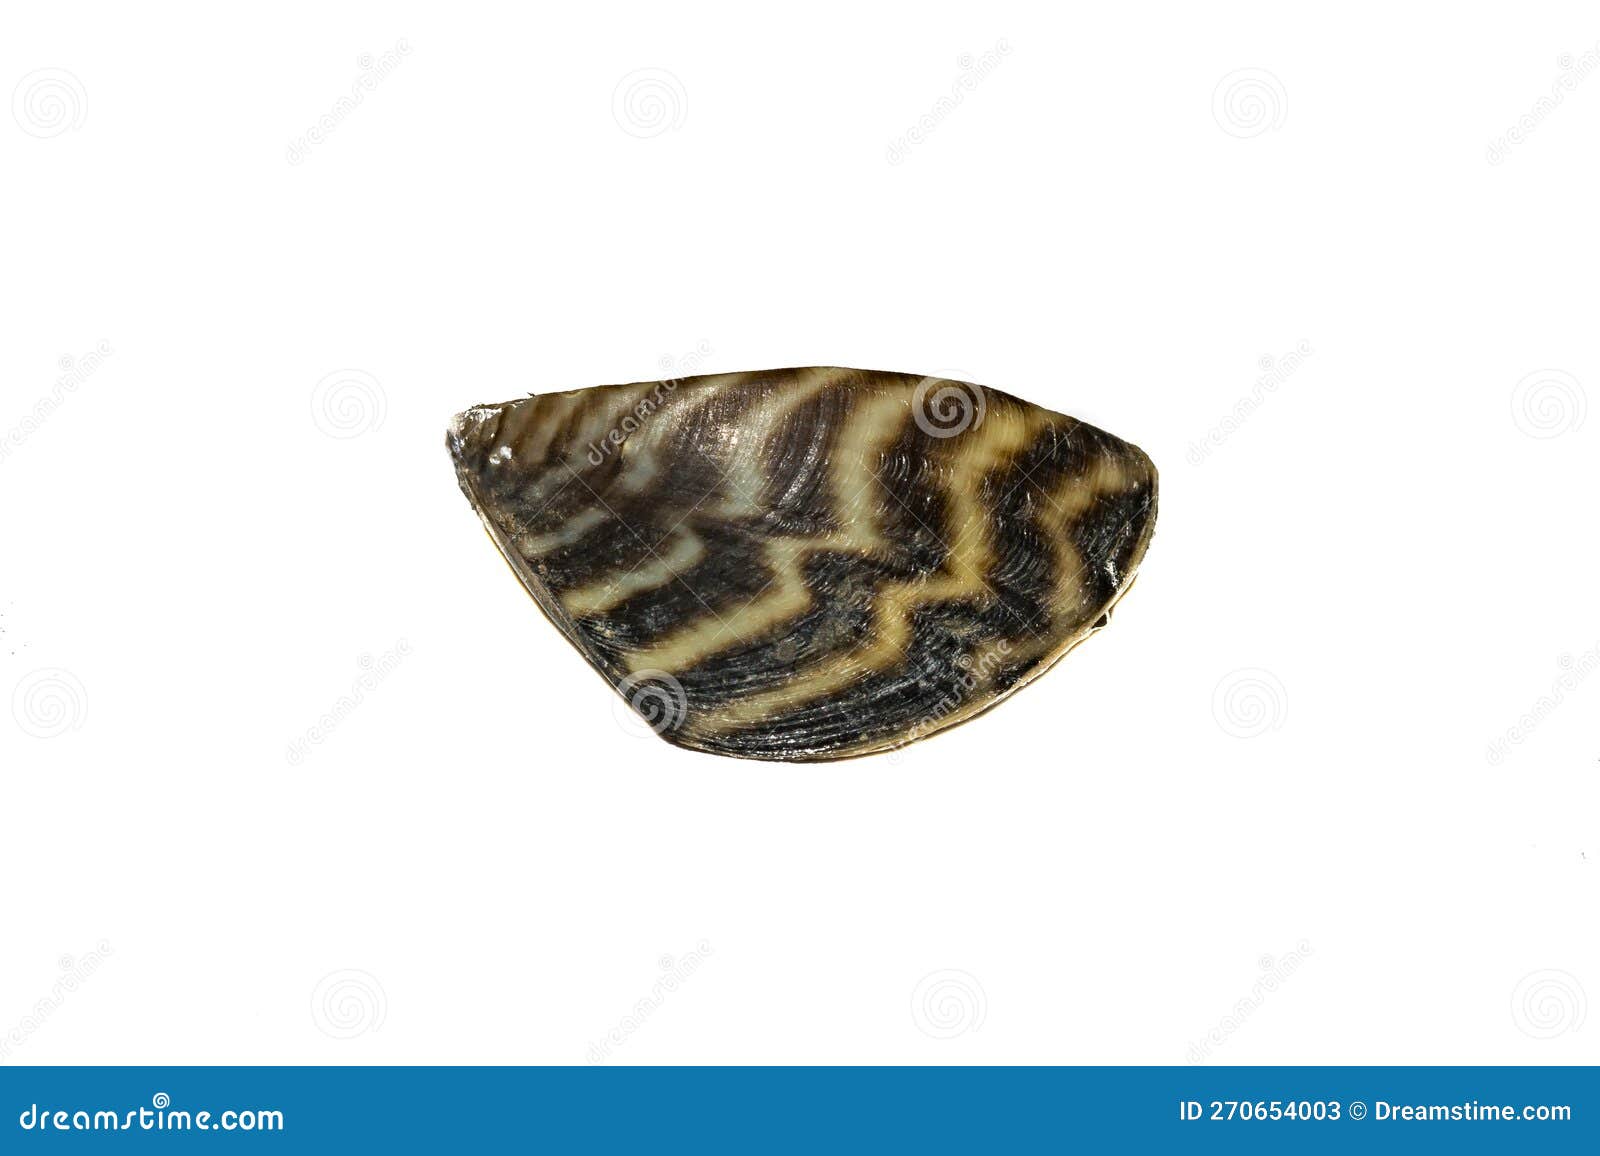 invasive zebra mussel - dreissena polymorpha